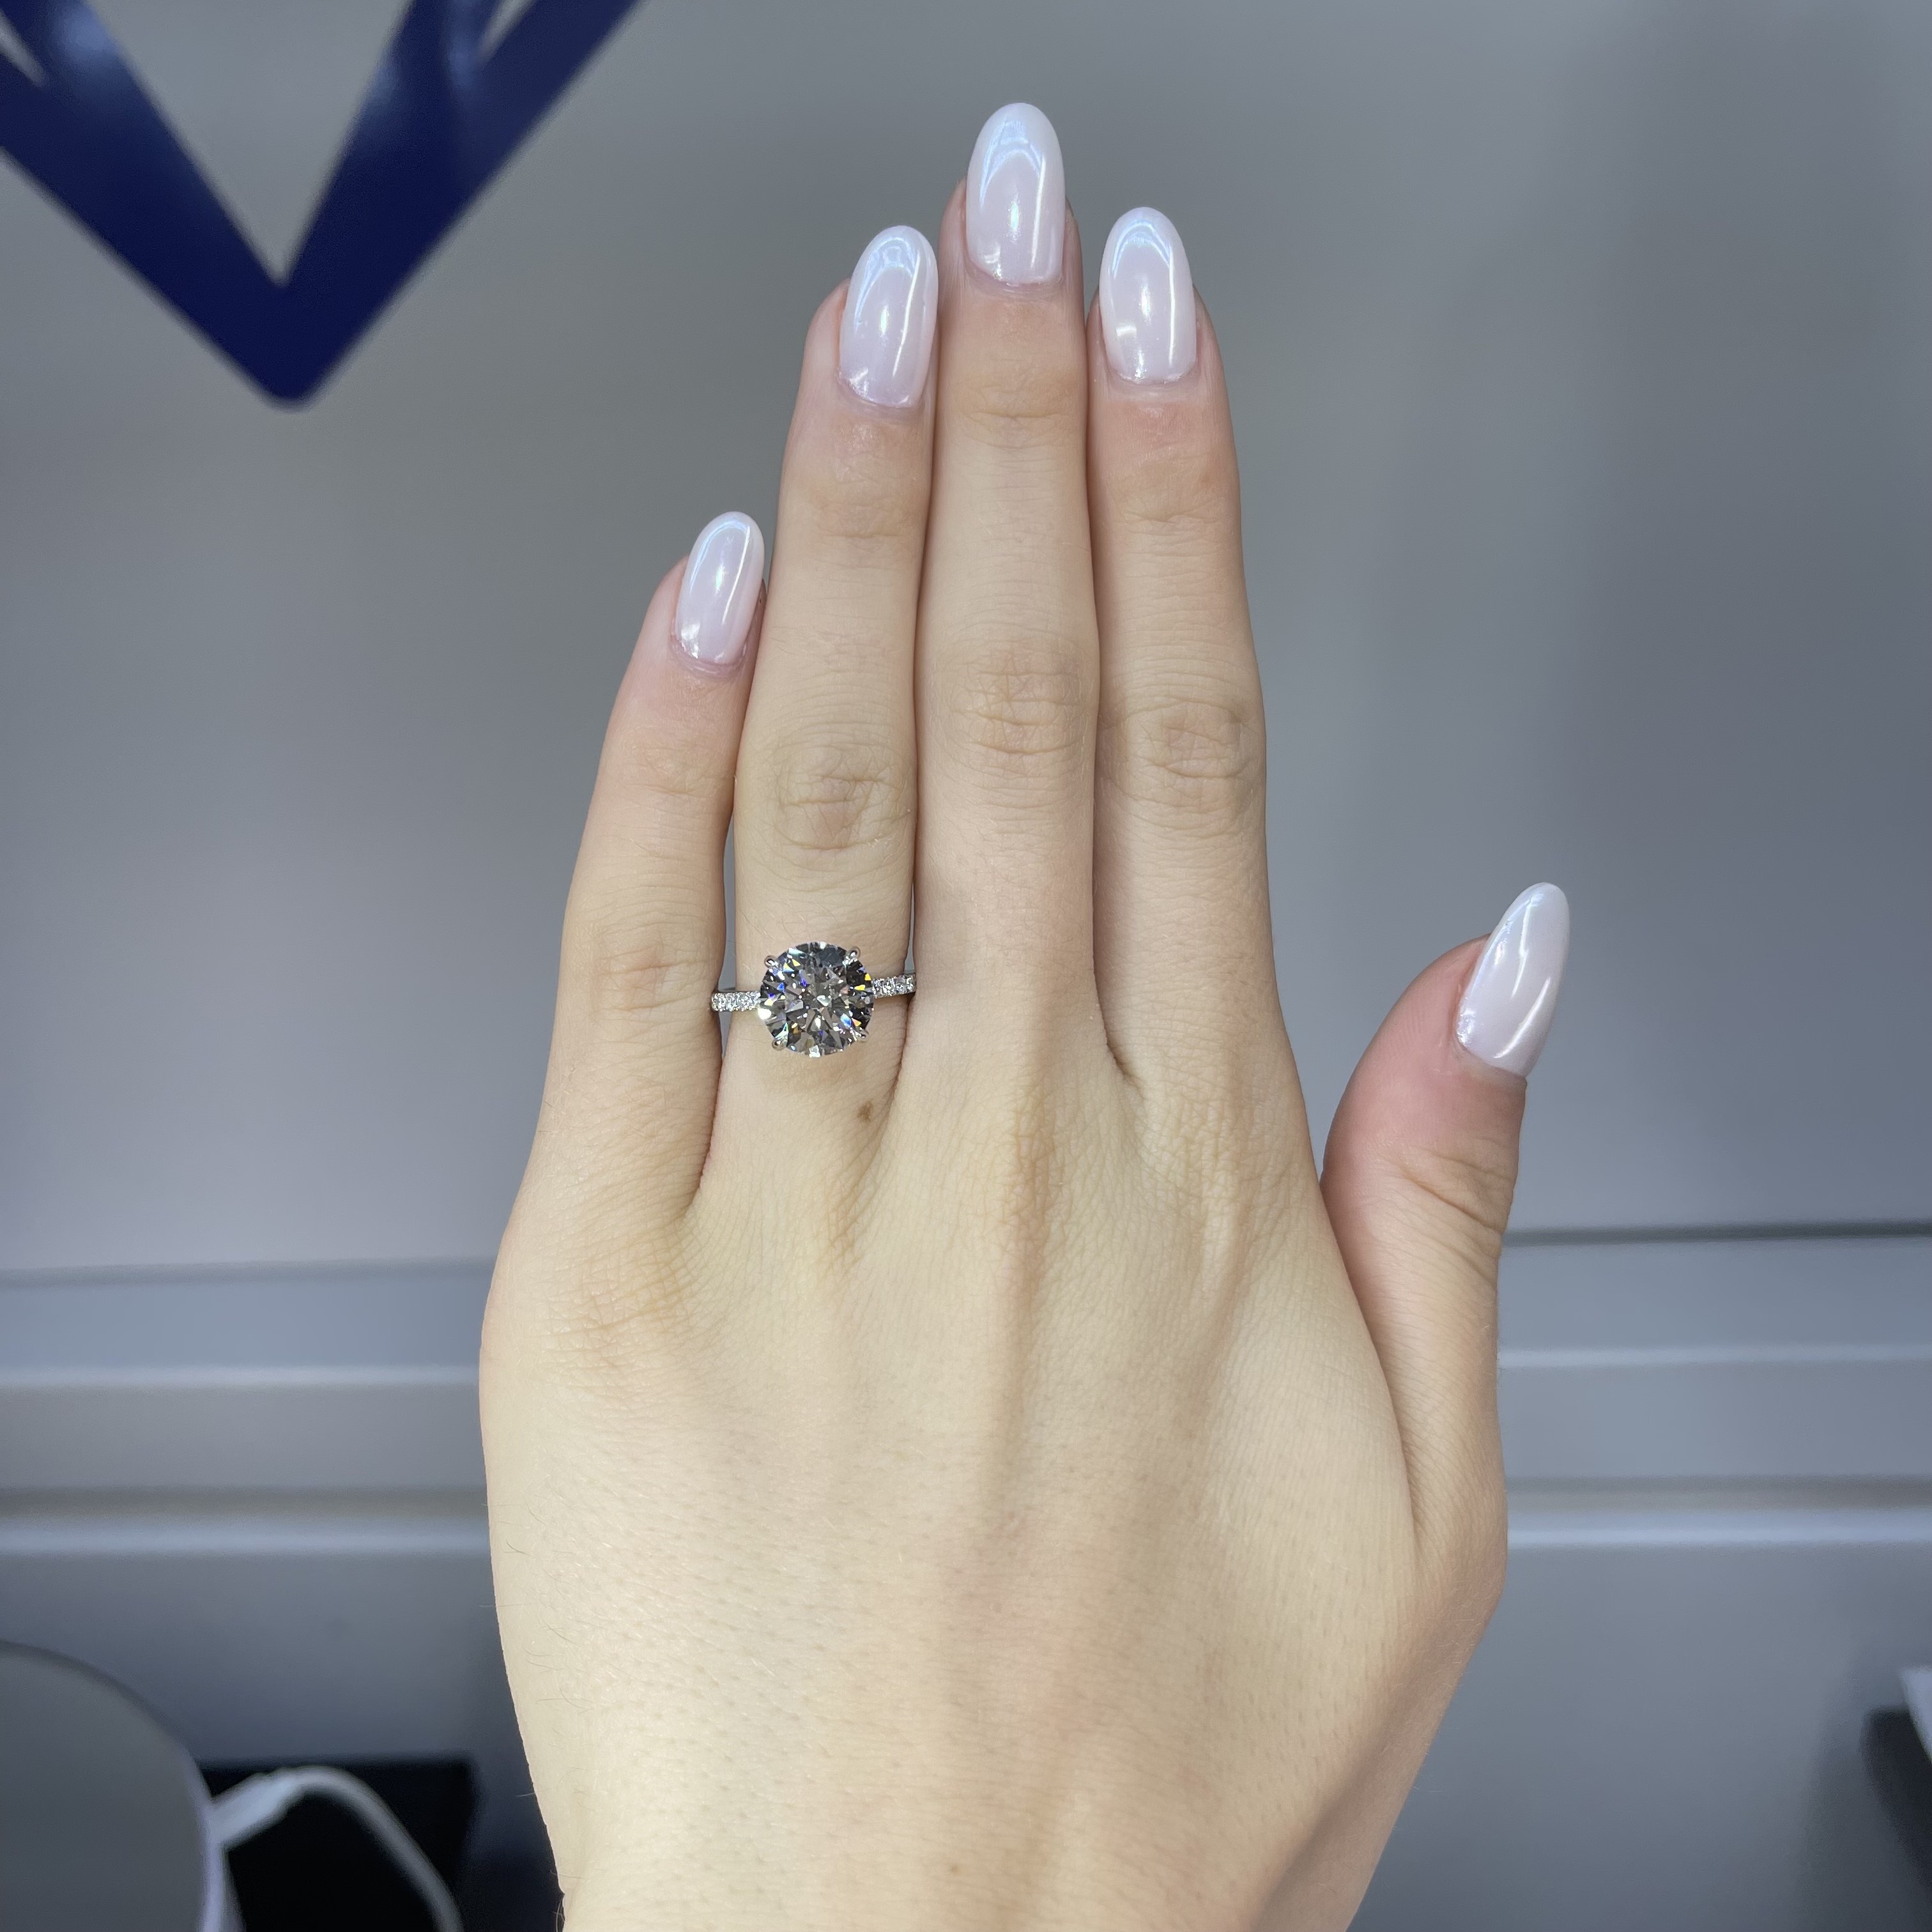 Emma Diamond Ring - Engagement Ring